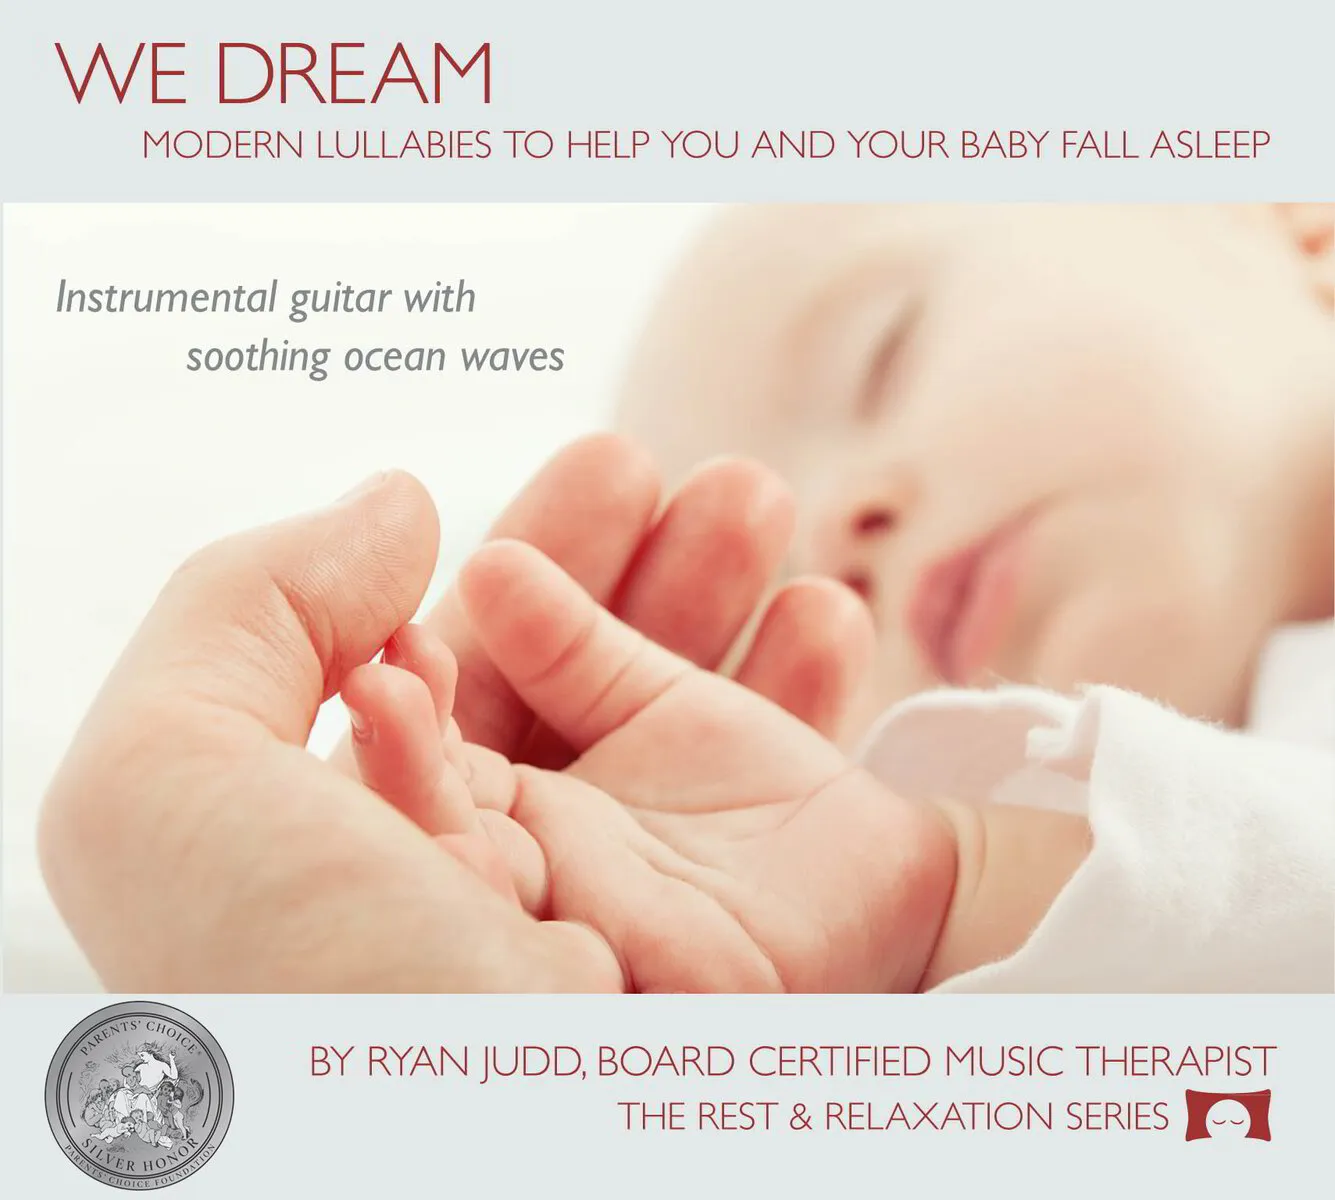 Lullaby Sleep Album, We Dream: Vol. 1 - Recording - Physical CD